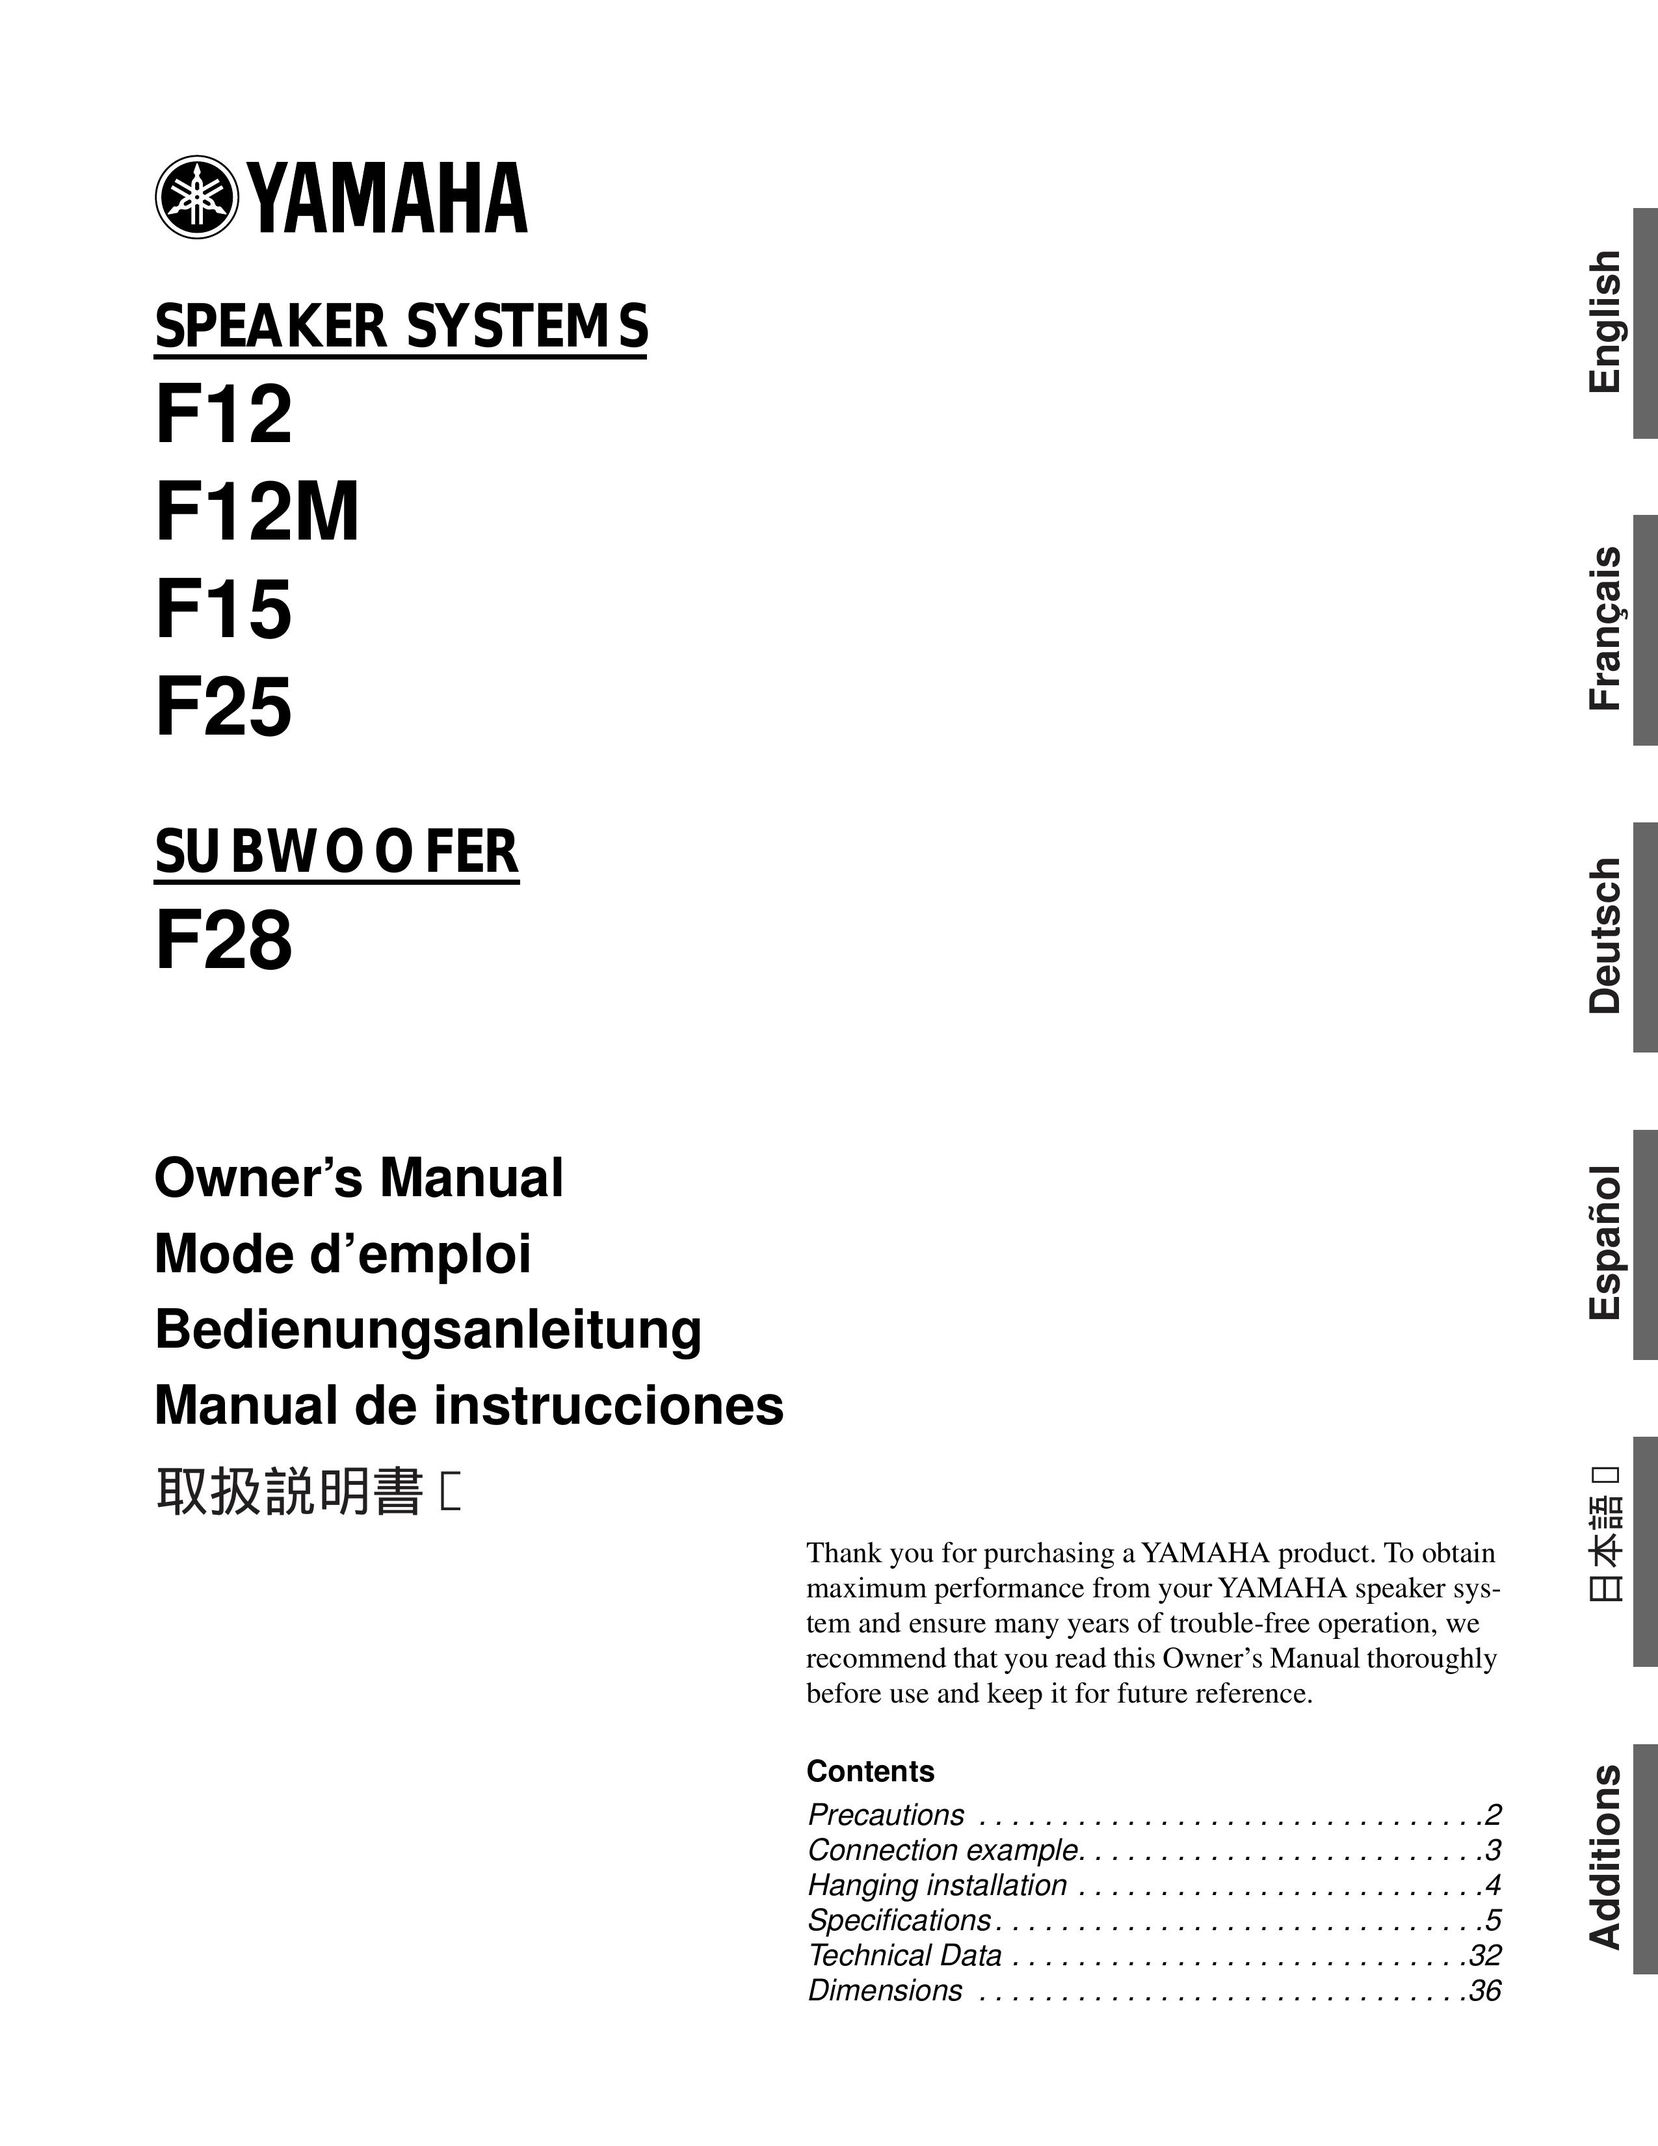 Yamaha F12M Speaker User Manual